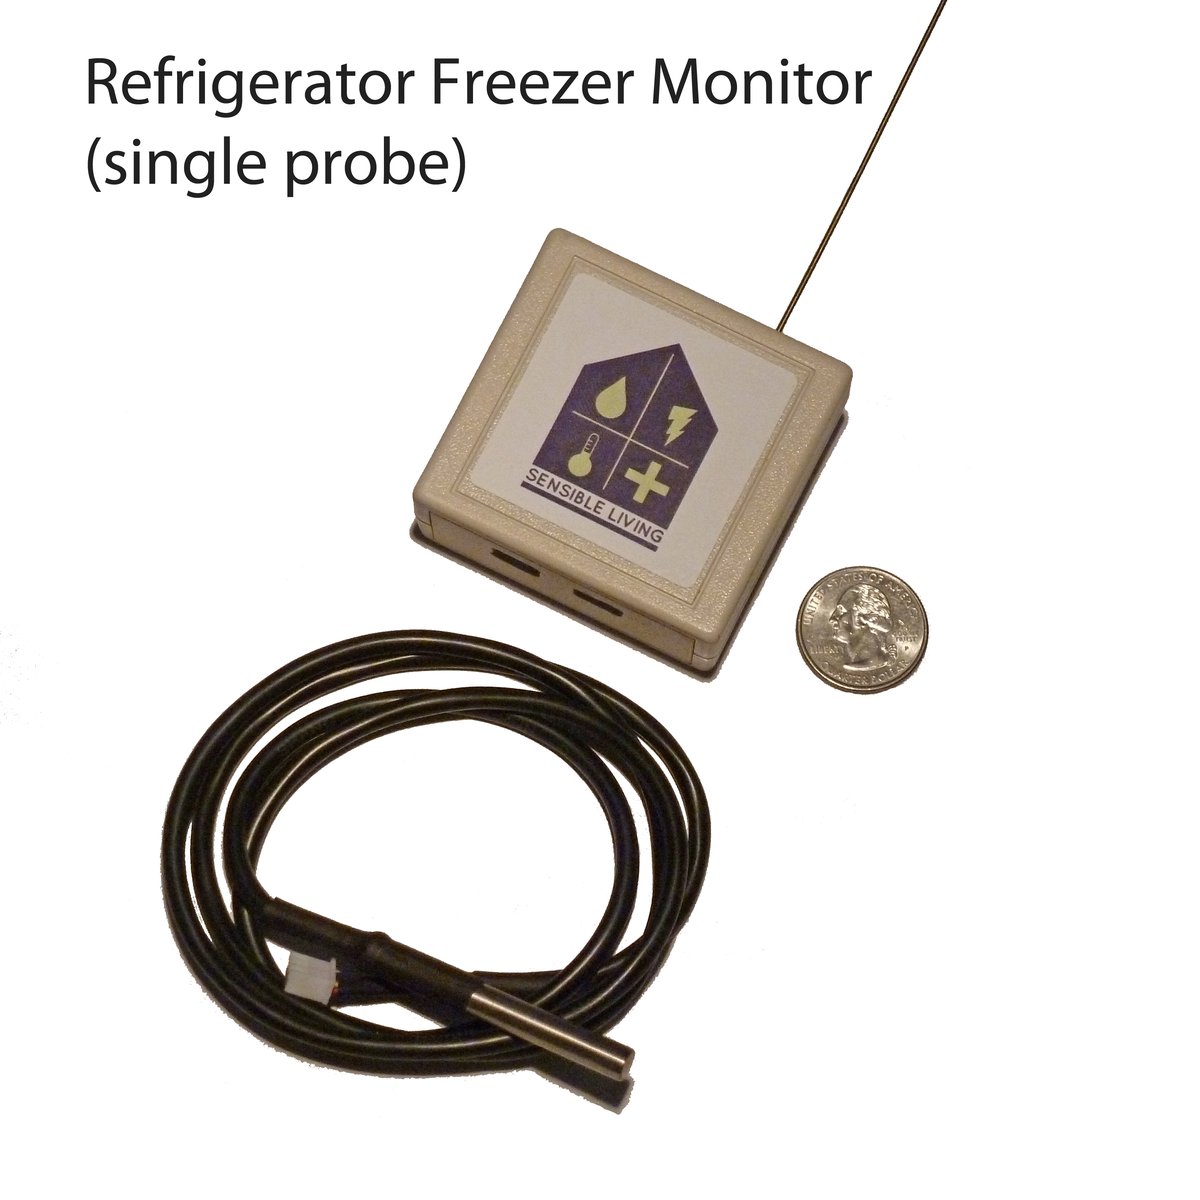 Refrigerator Monitoring System, WiFi Freezer Alarm